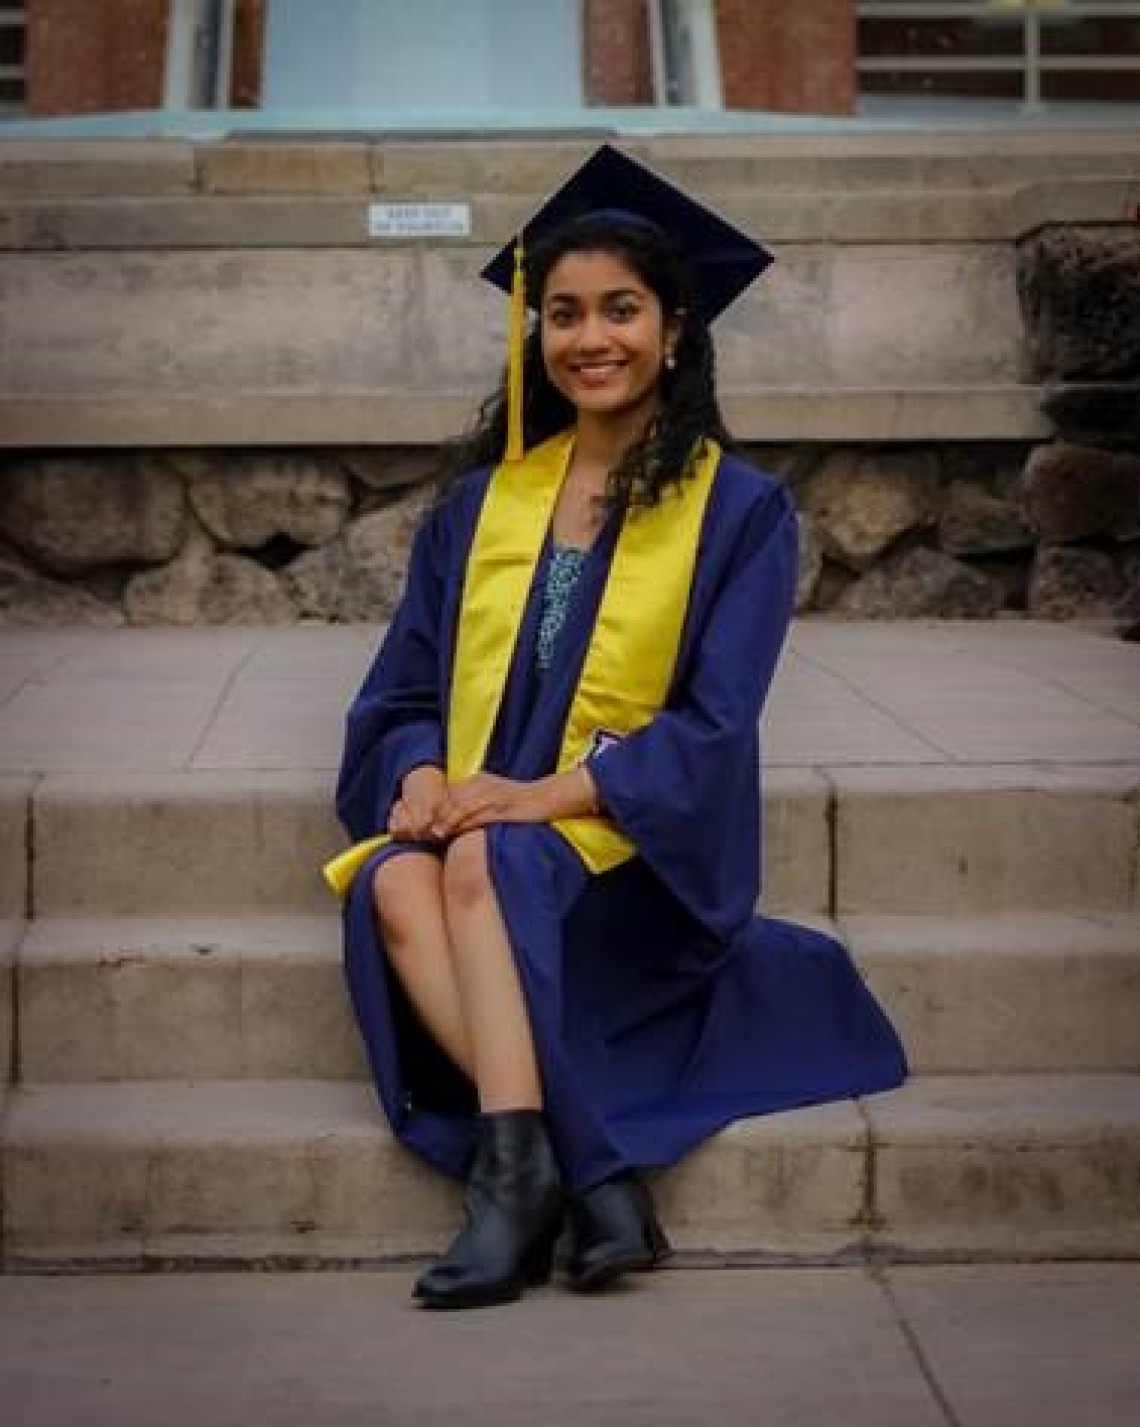 Vara Vungur sitting on steps wearing graduation cap and gown